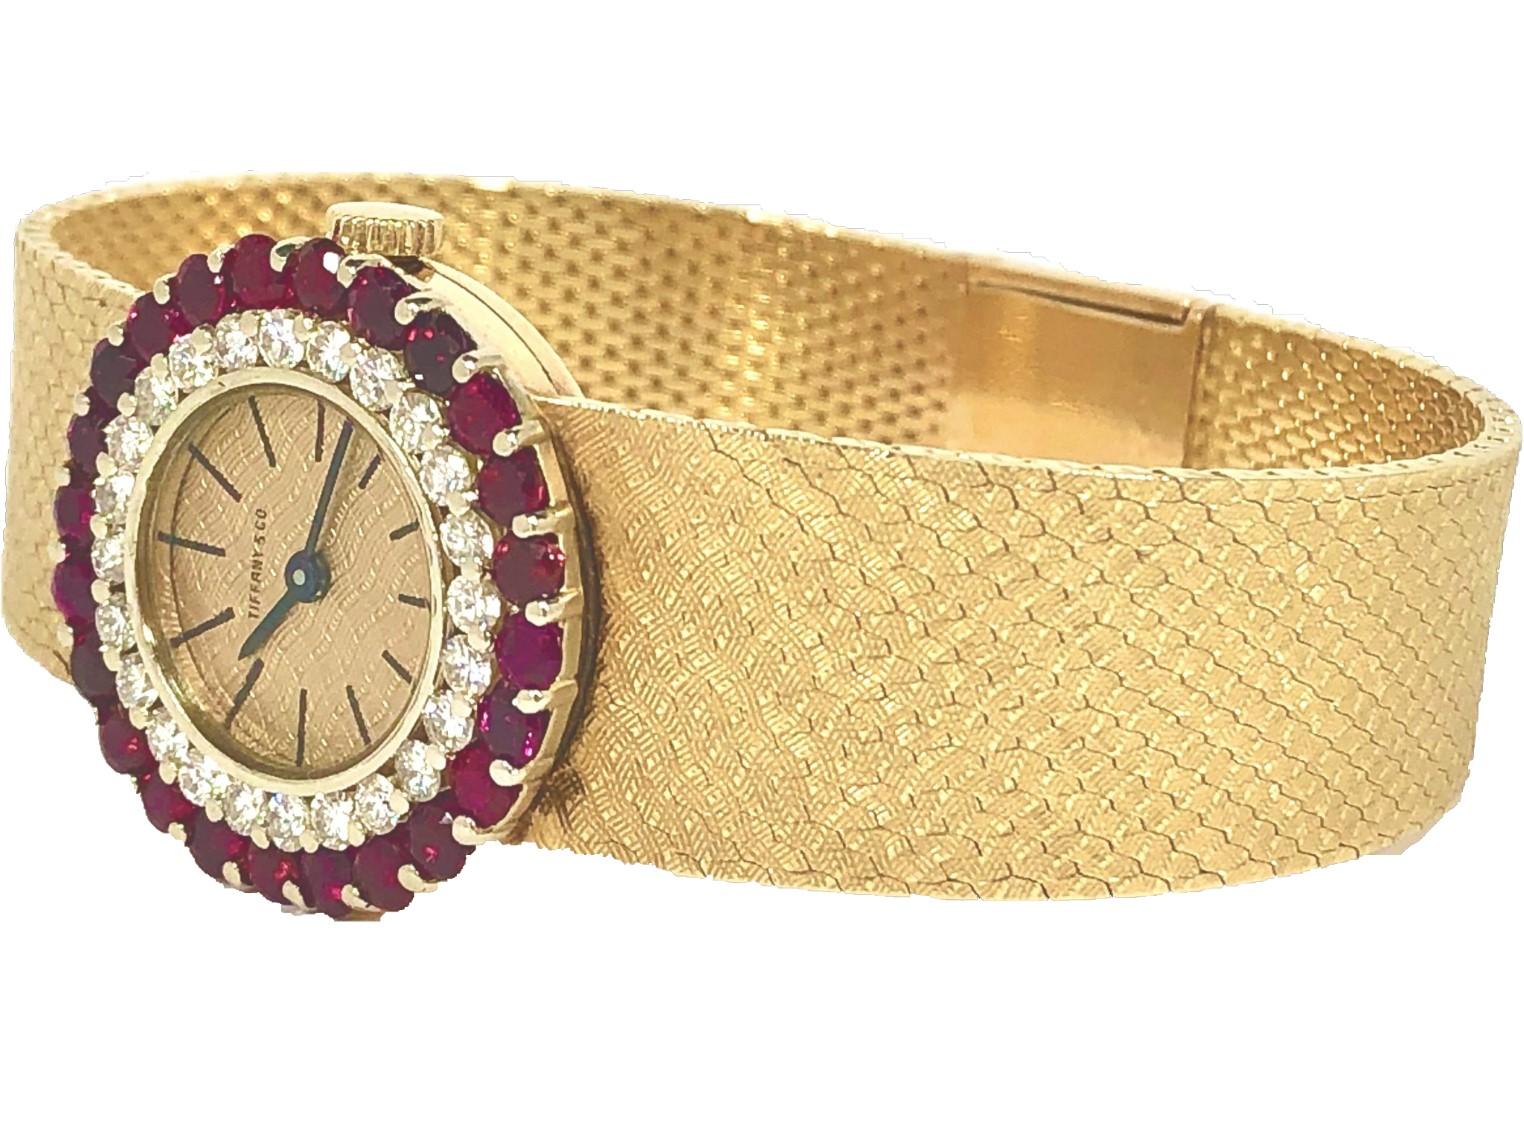 Women's Tiffany & Co. Gold Double Bezel Watch with One Diamond Bezel and One Ruby Bezel